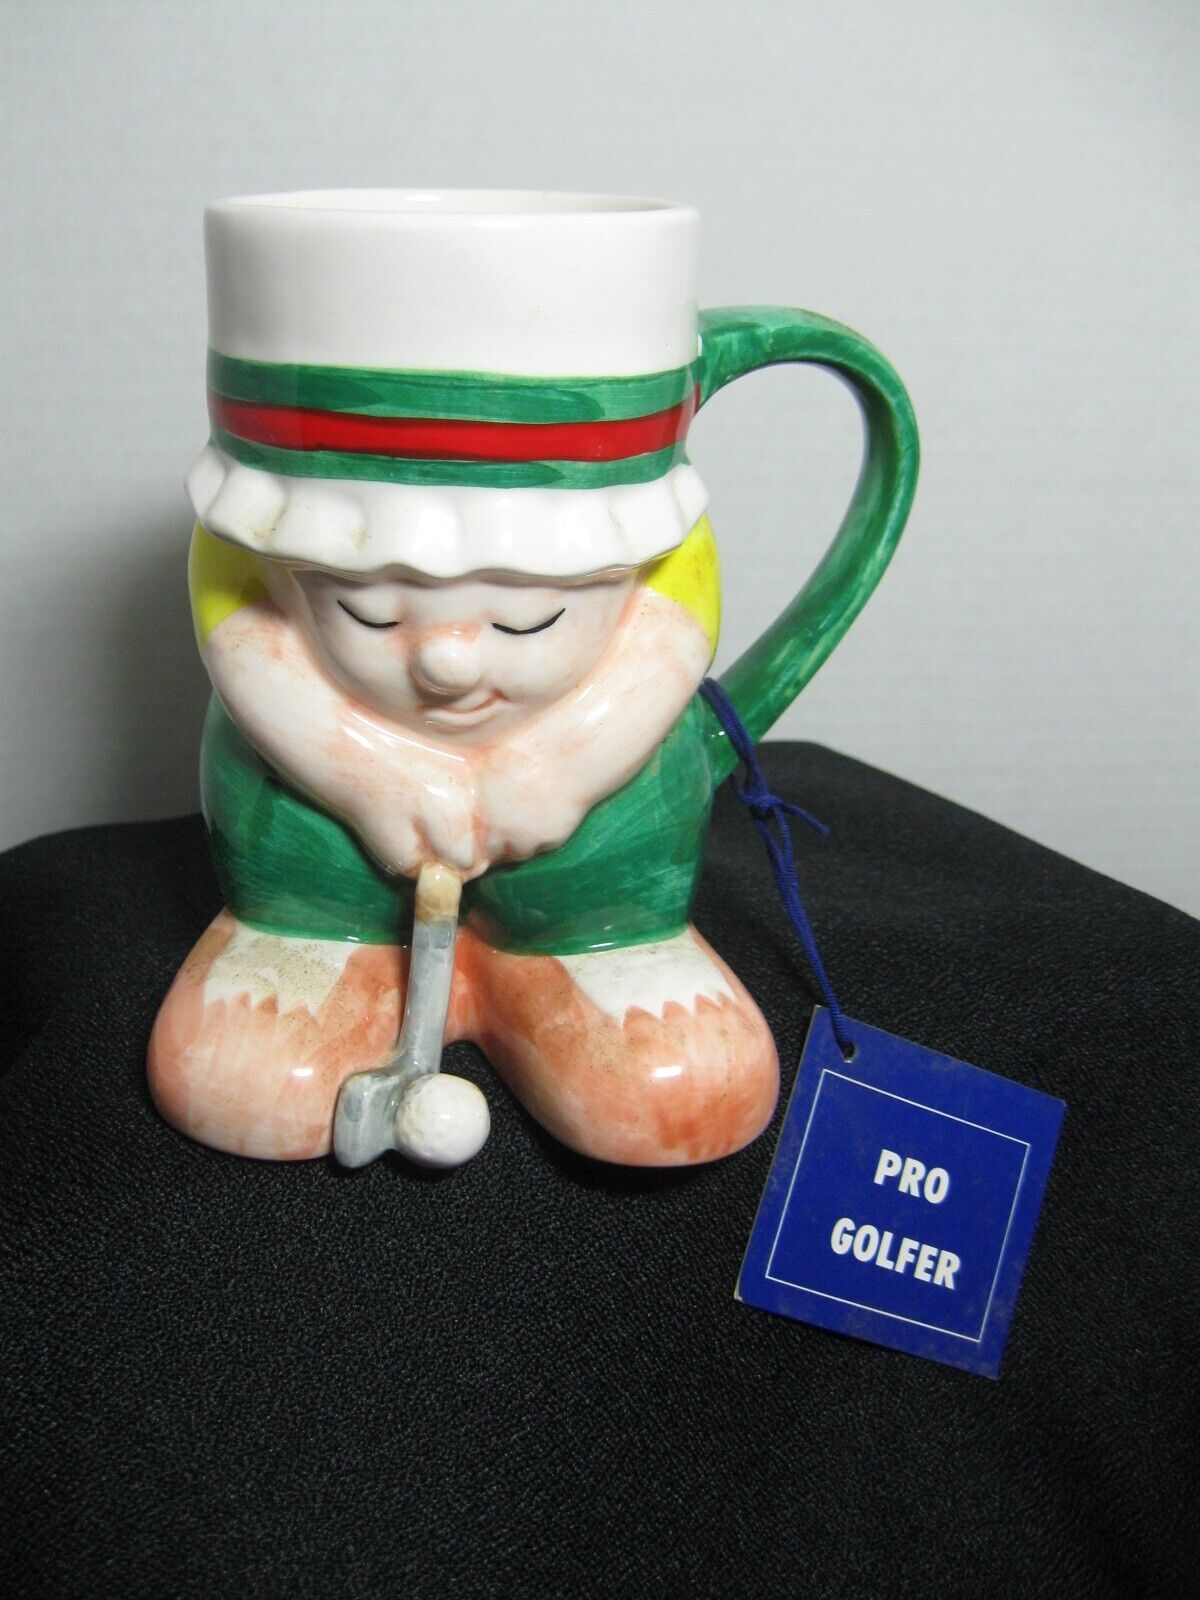 Pro Golfer Mug Coffee Cup Golf Humor Joke Gag Gift  BRAND NEW   *